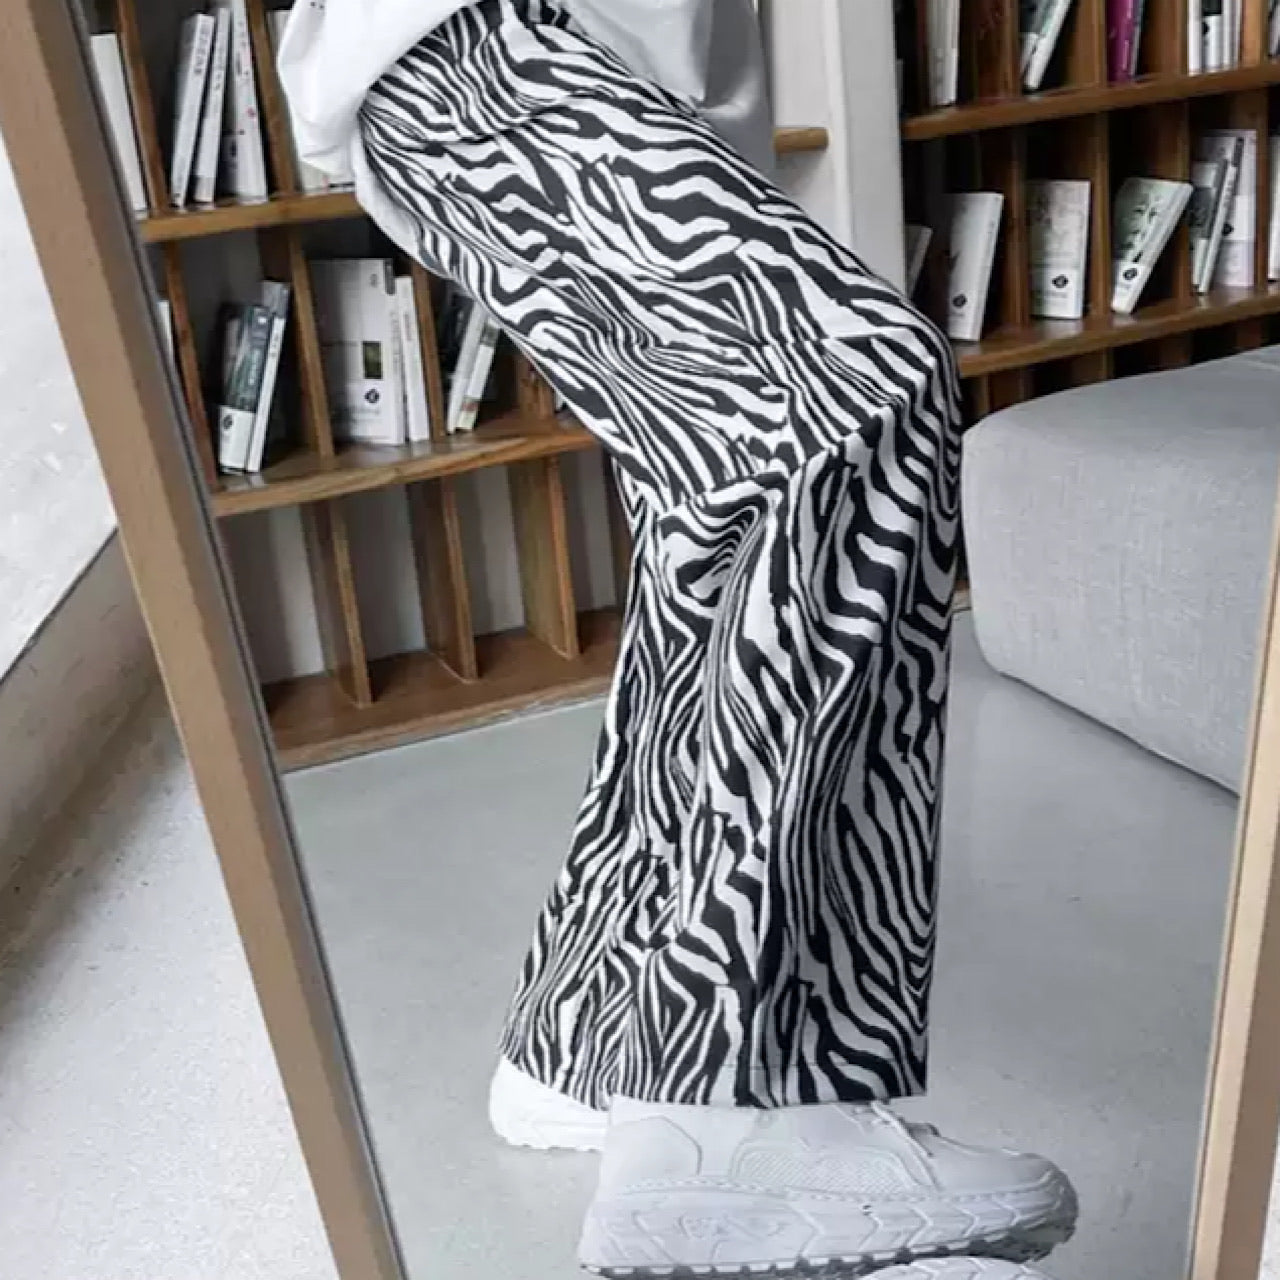 2-color zebra pants HL1449